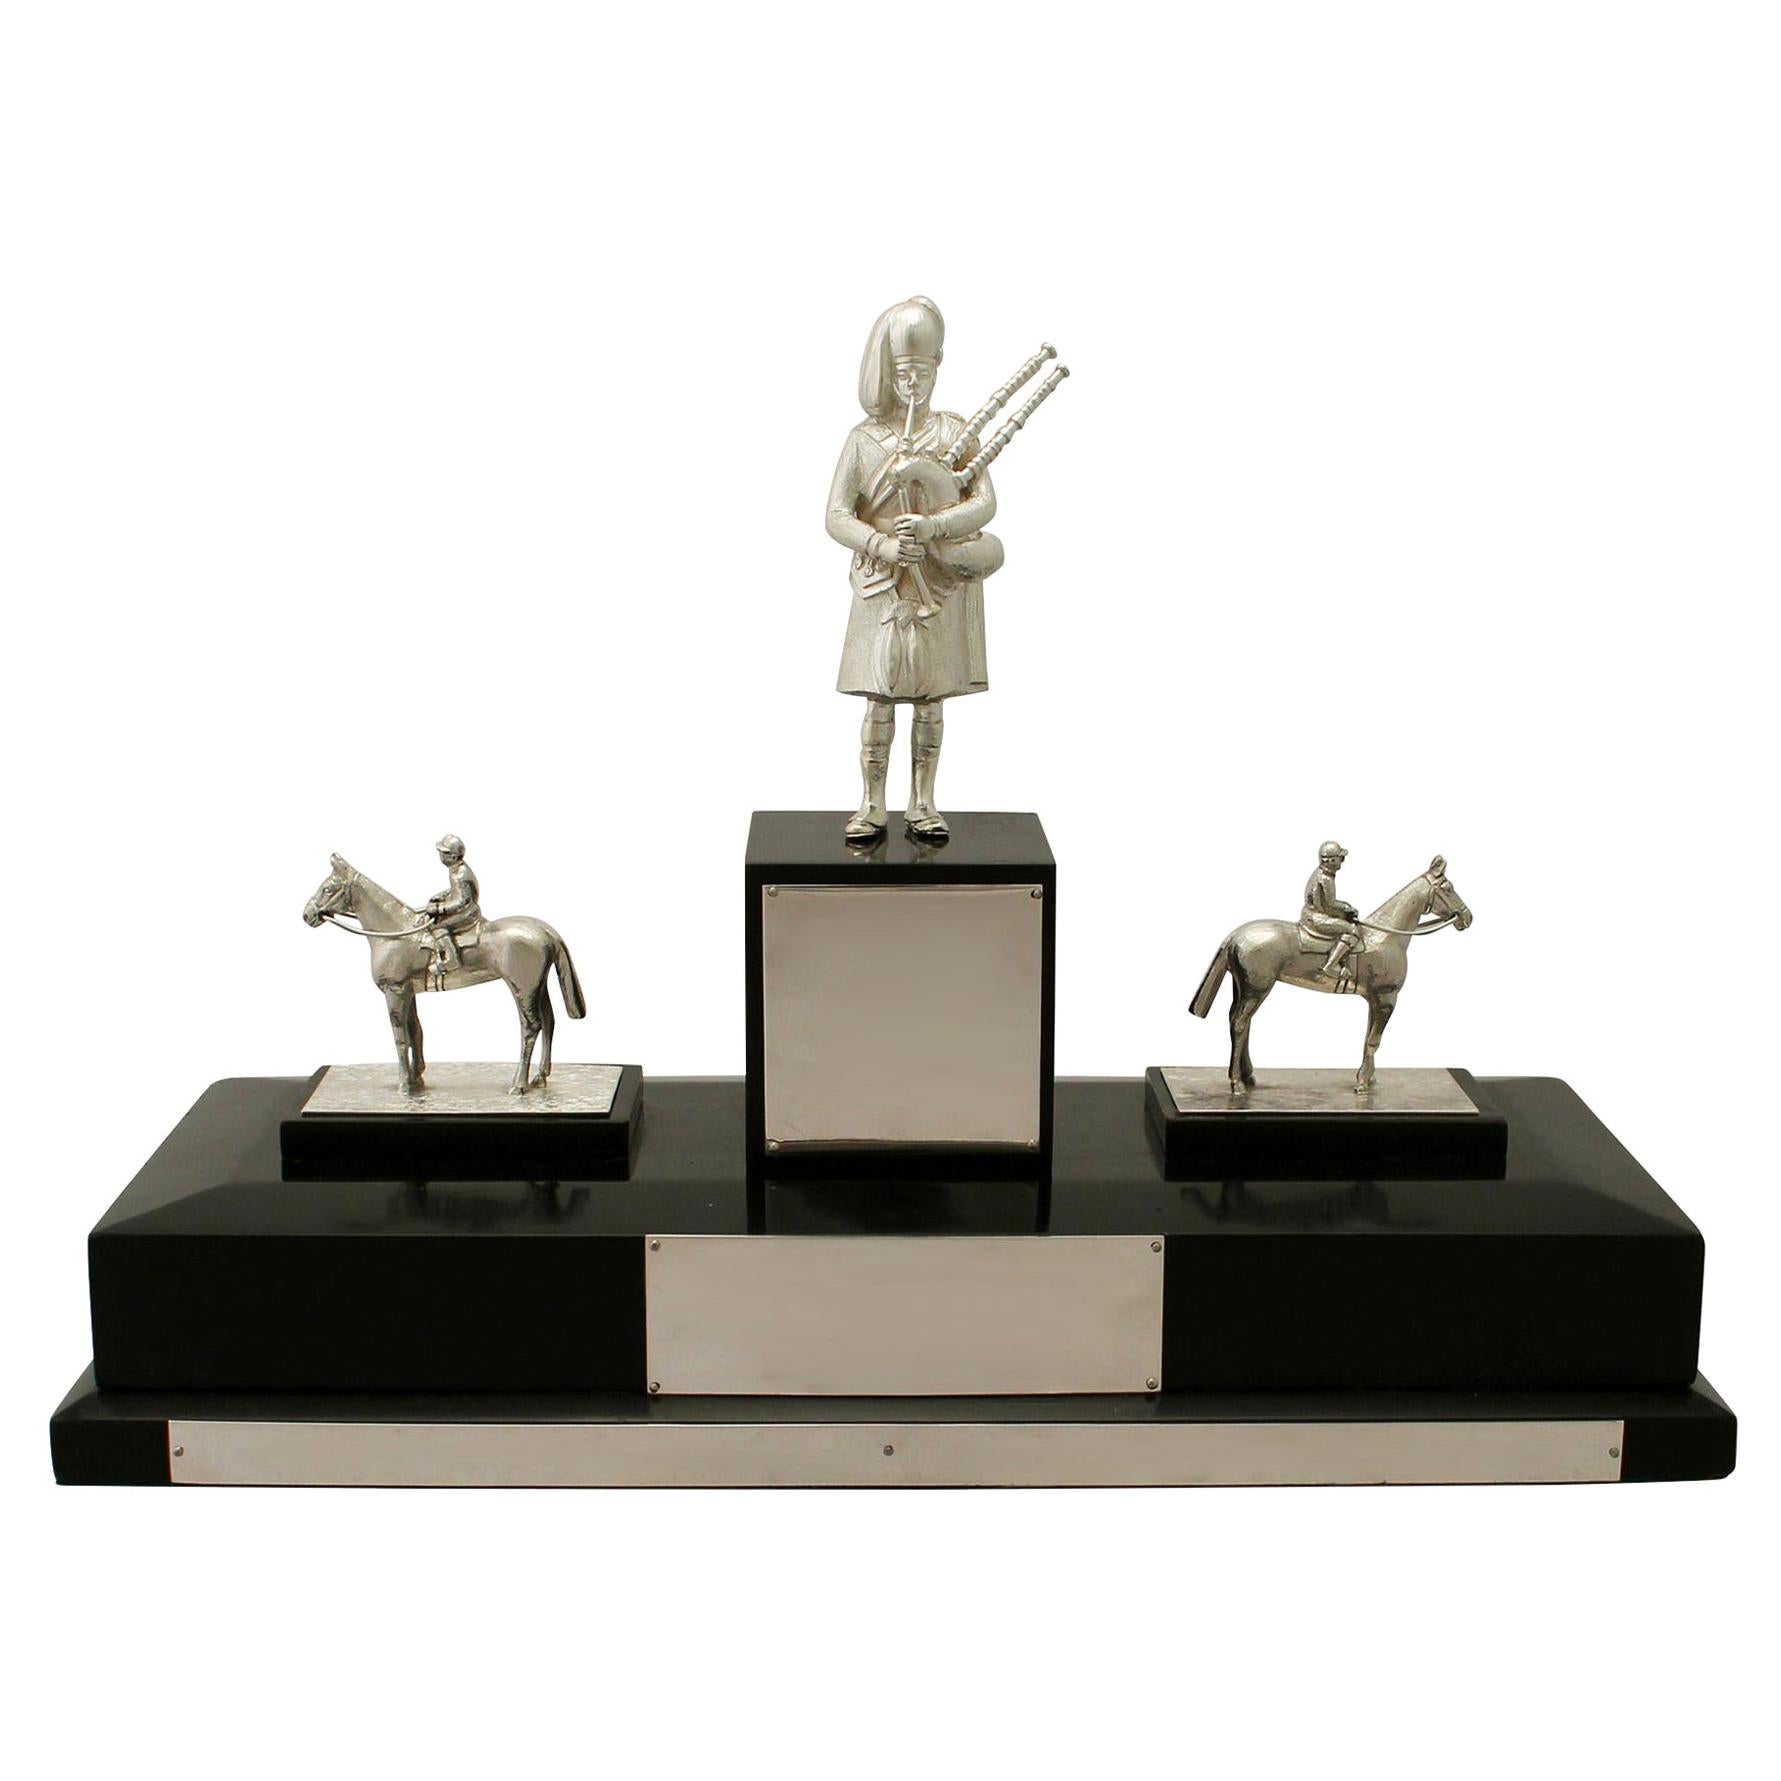 Antique Sterling Silver Presentation Trophy/Centerpiece